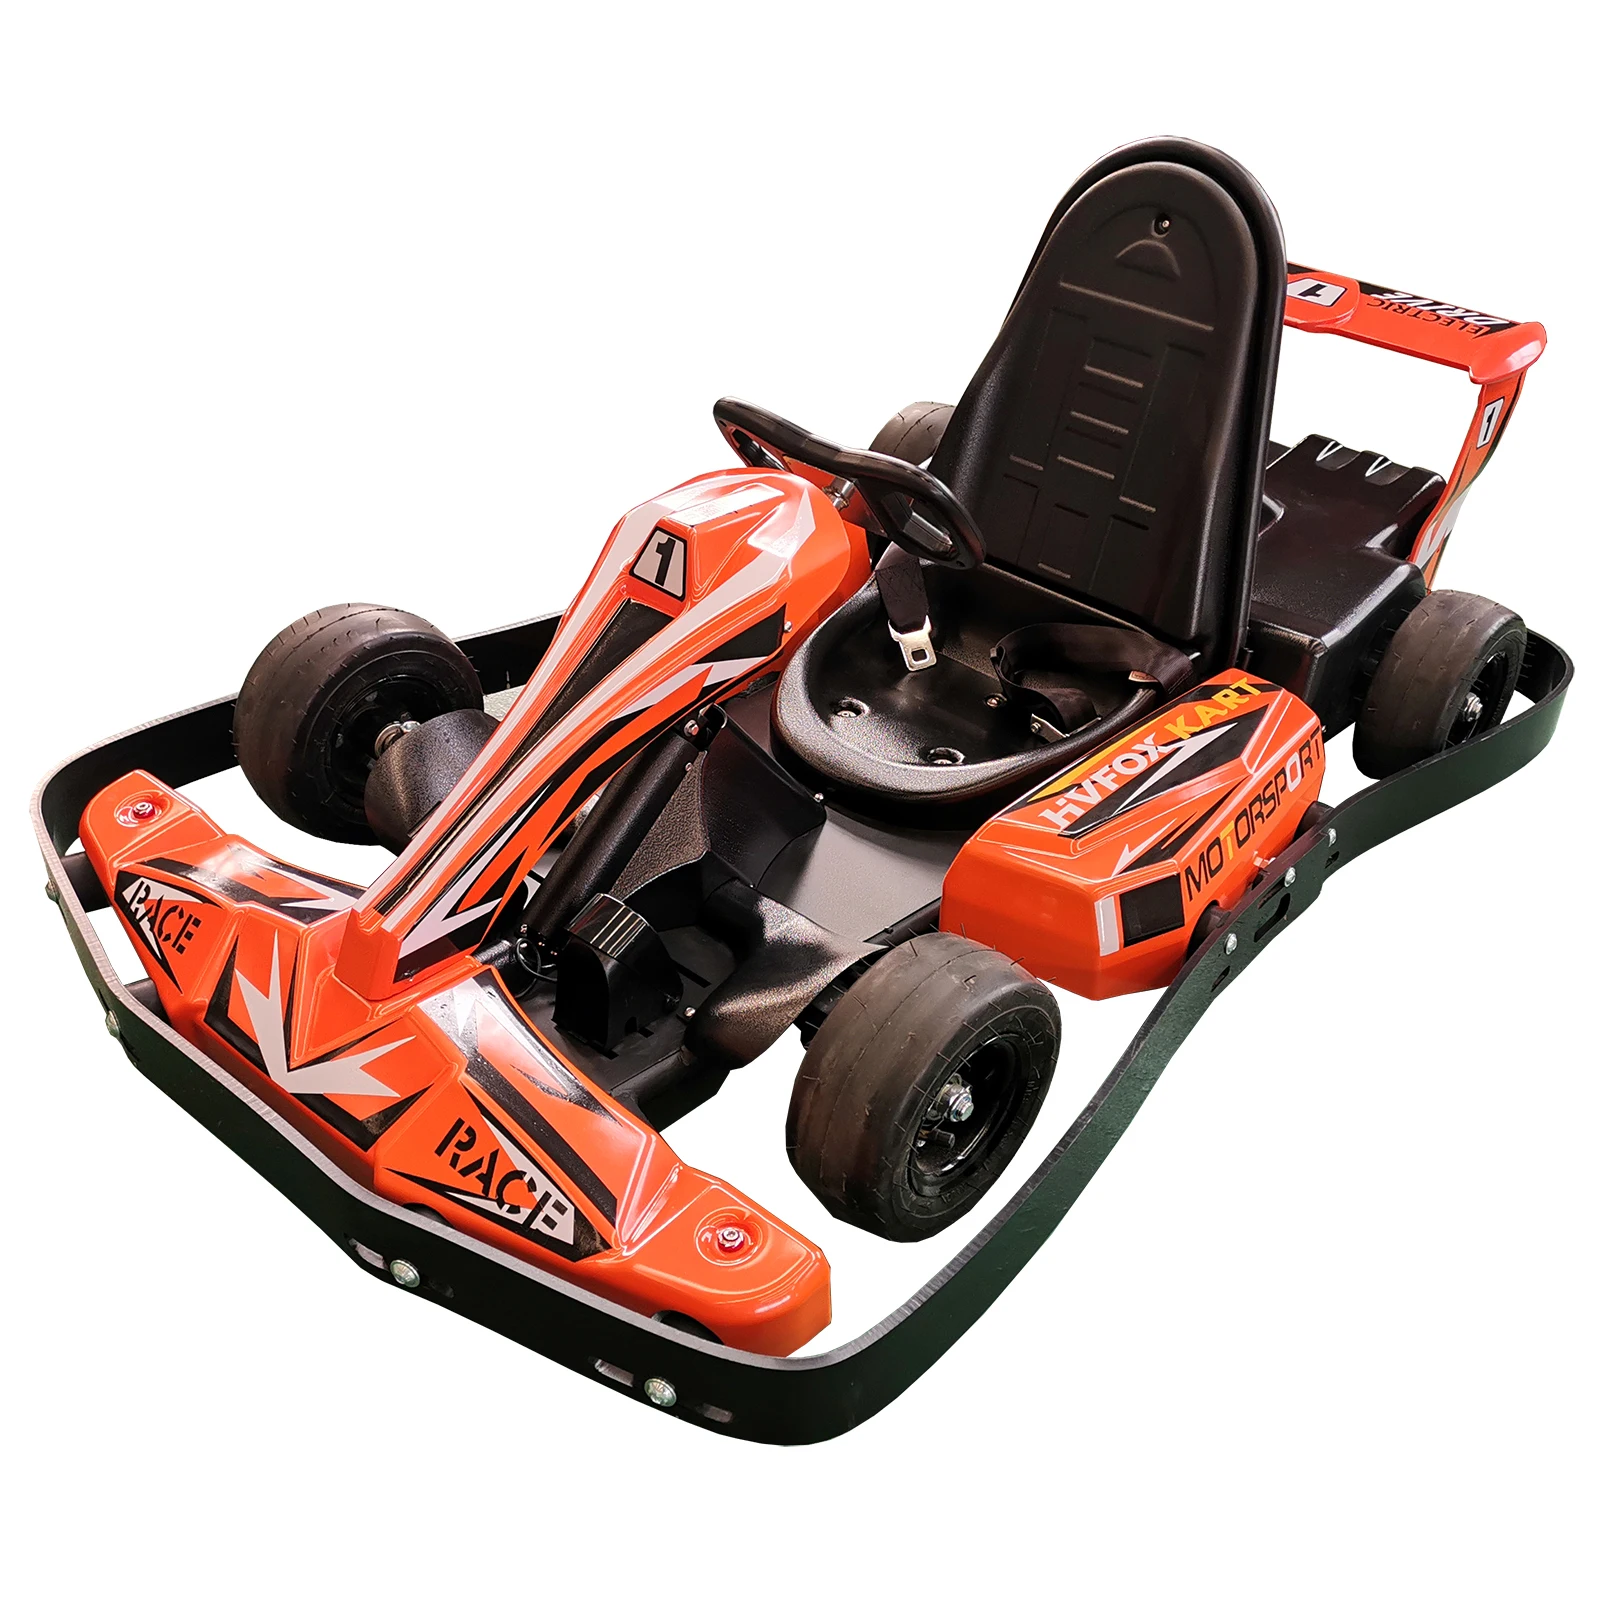 Challenge Sport HVFOX Brand go cart kids go kart racing for sale (10000004593469)